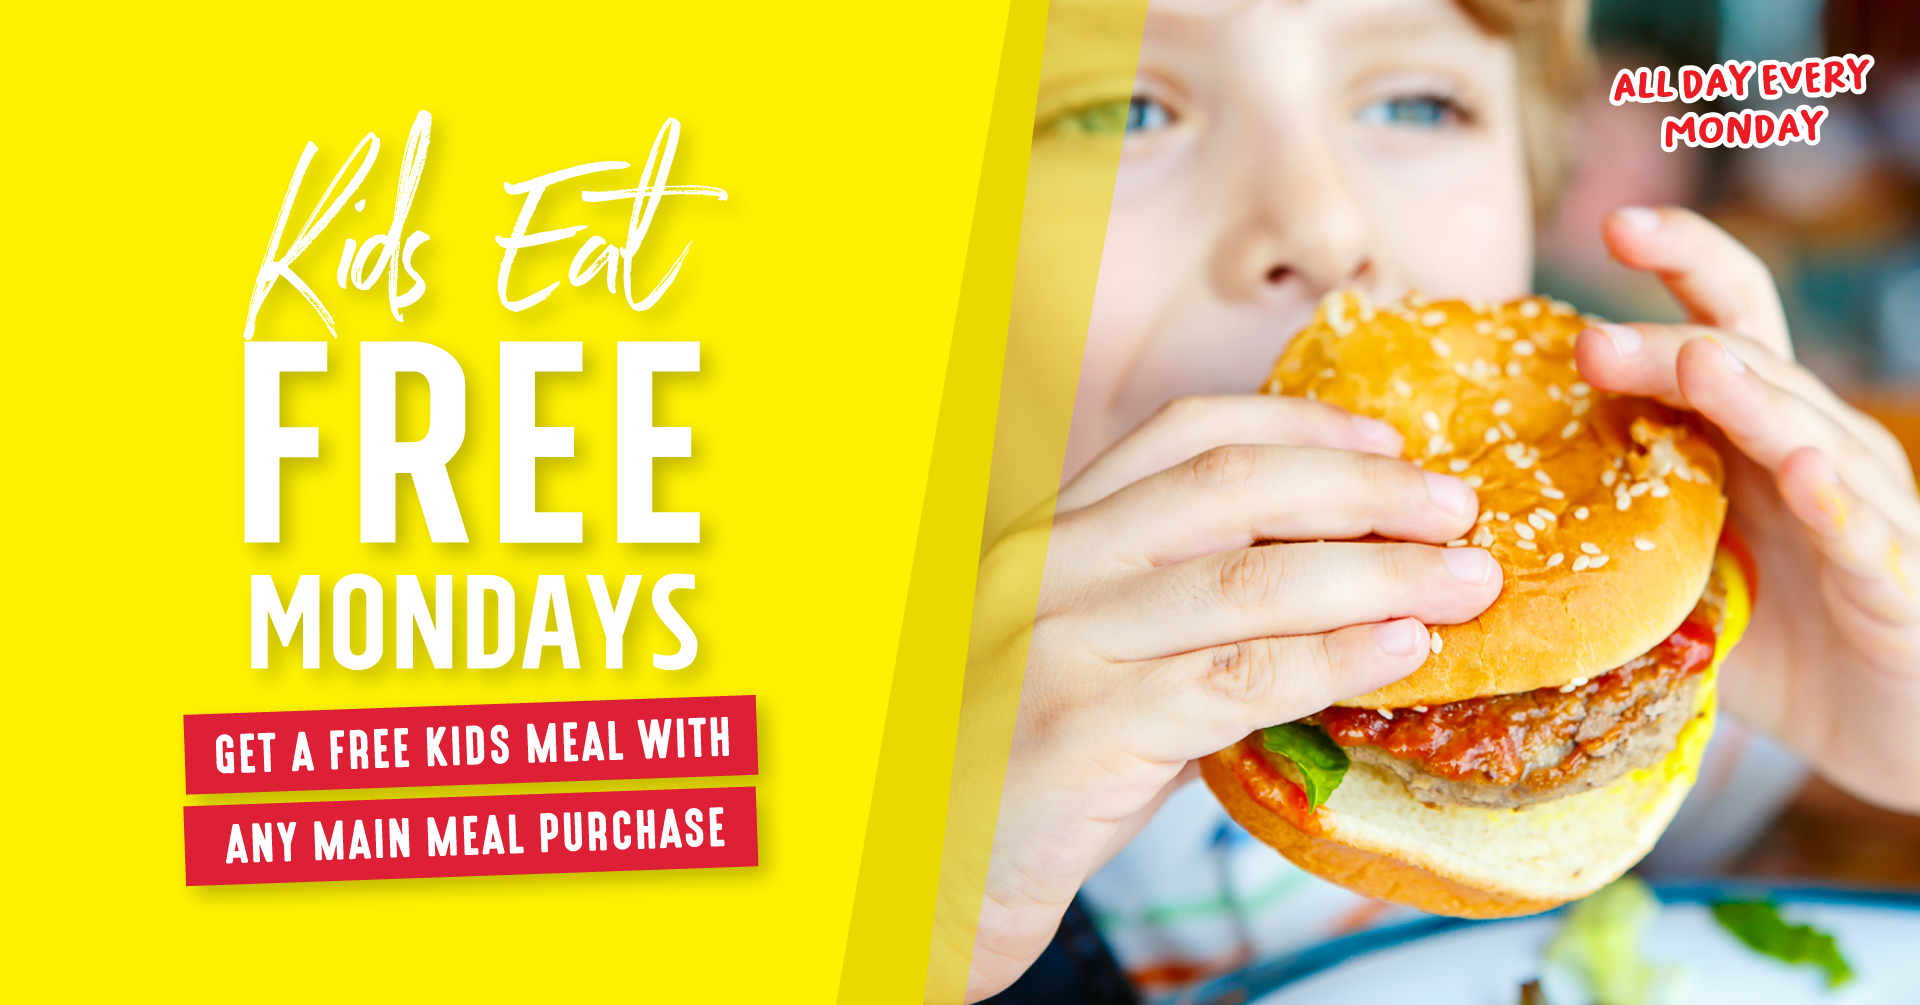 Monday Kids Eat Free All Day